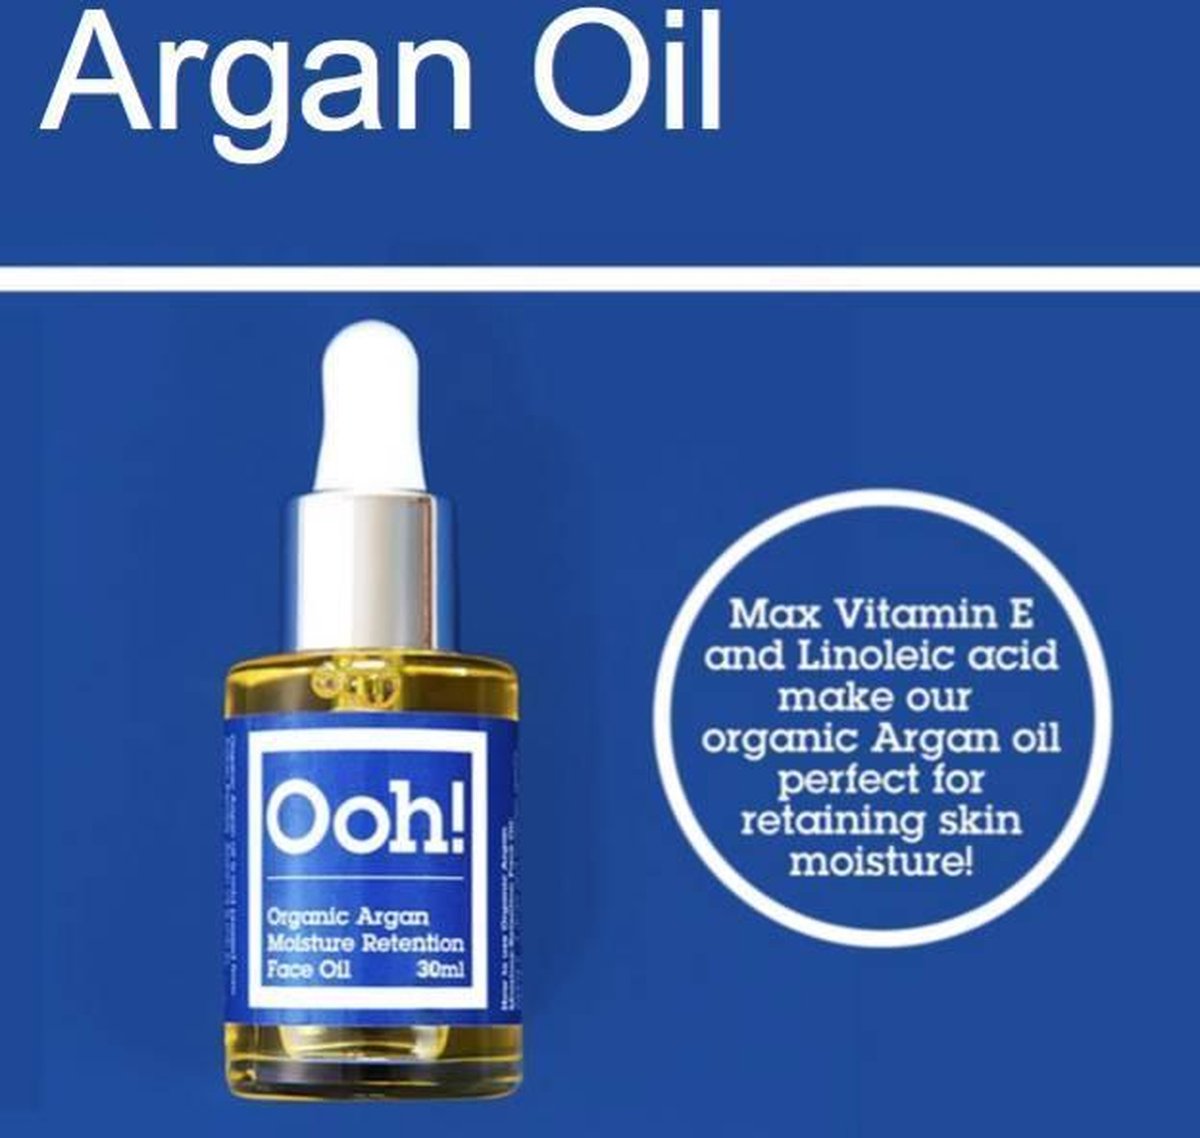 Ooh! Oils of Heaven - Organic Argan Moisture Retention Face Oil